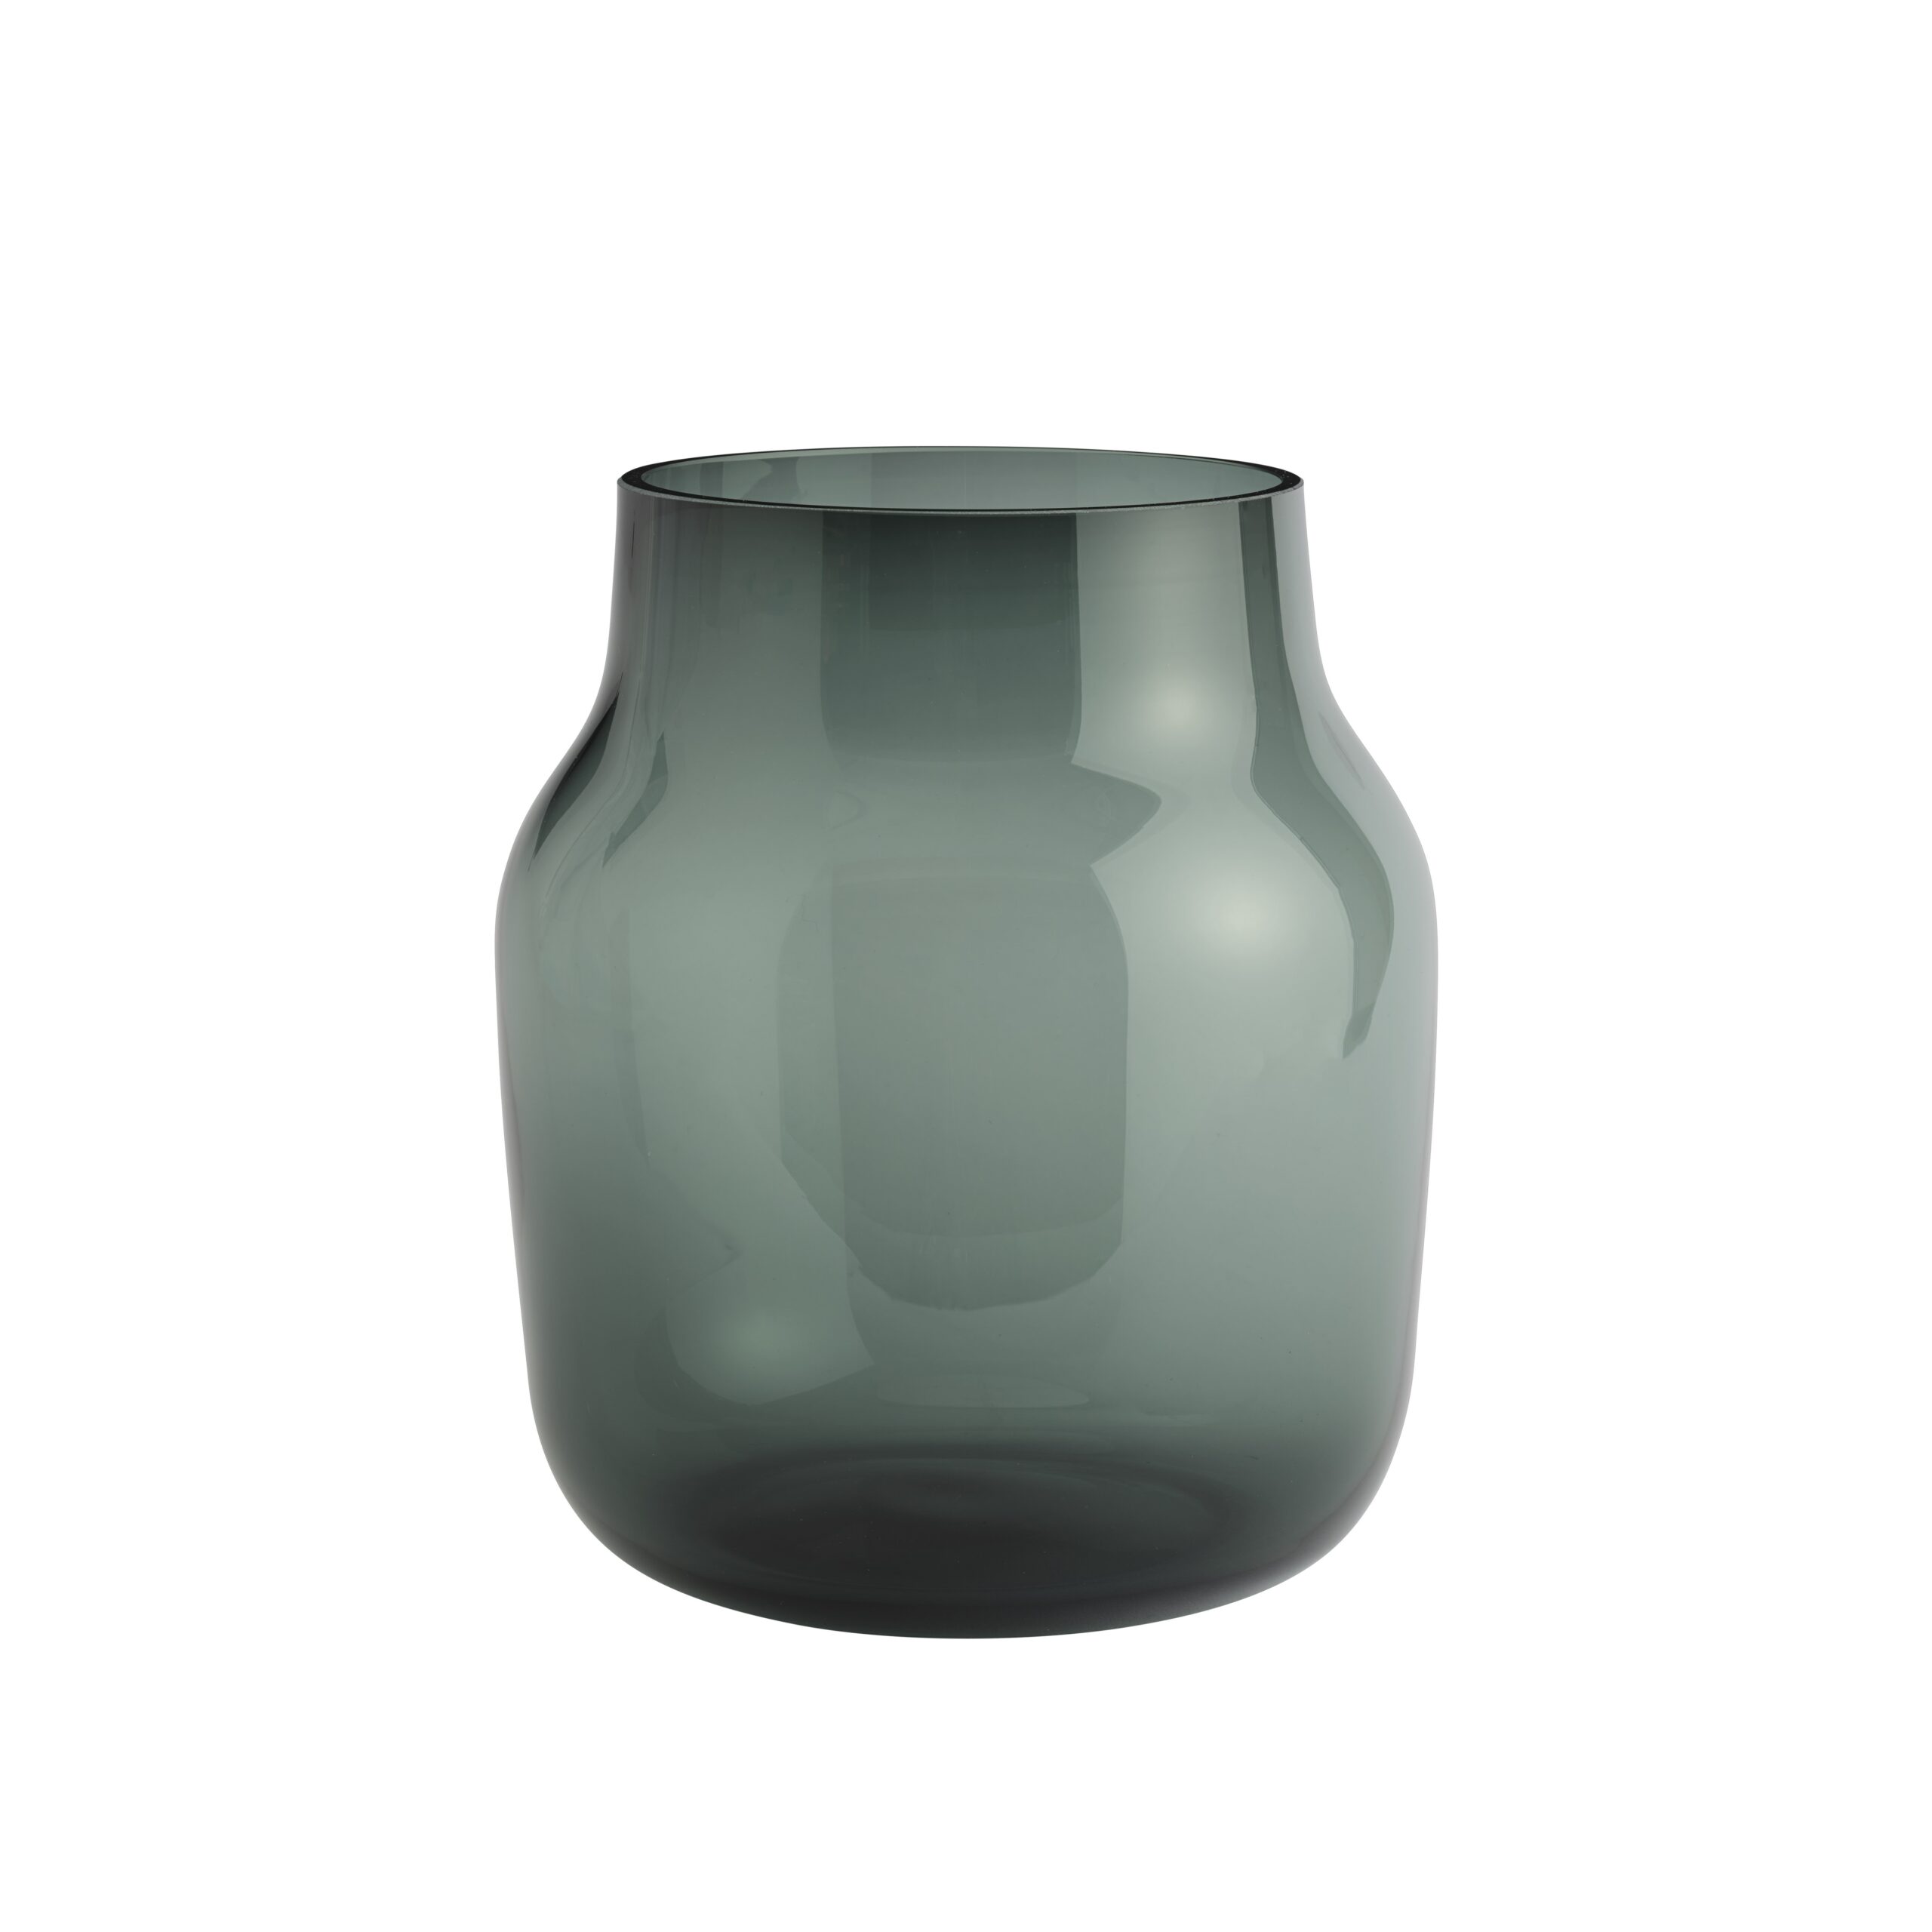 Silent-vase-20-dark-green-muuto-5000×5000-hi-res